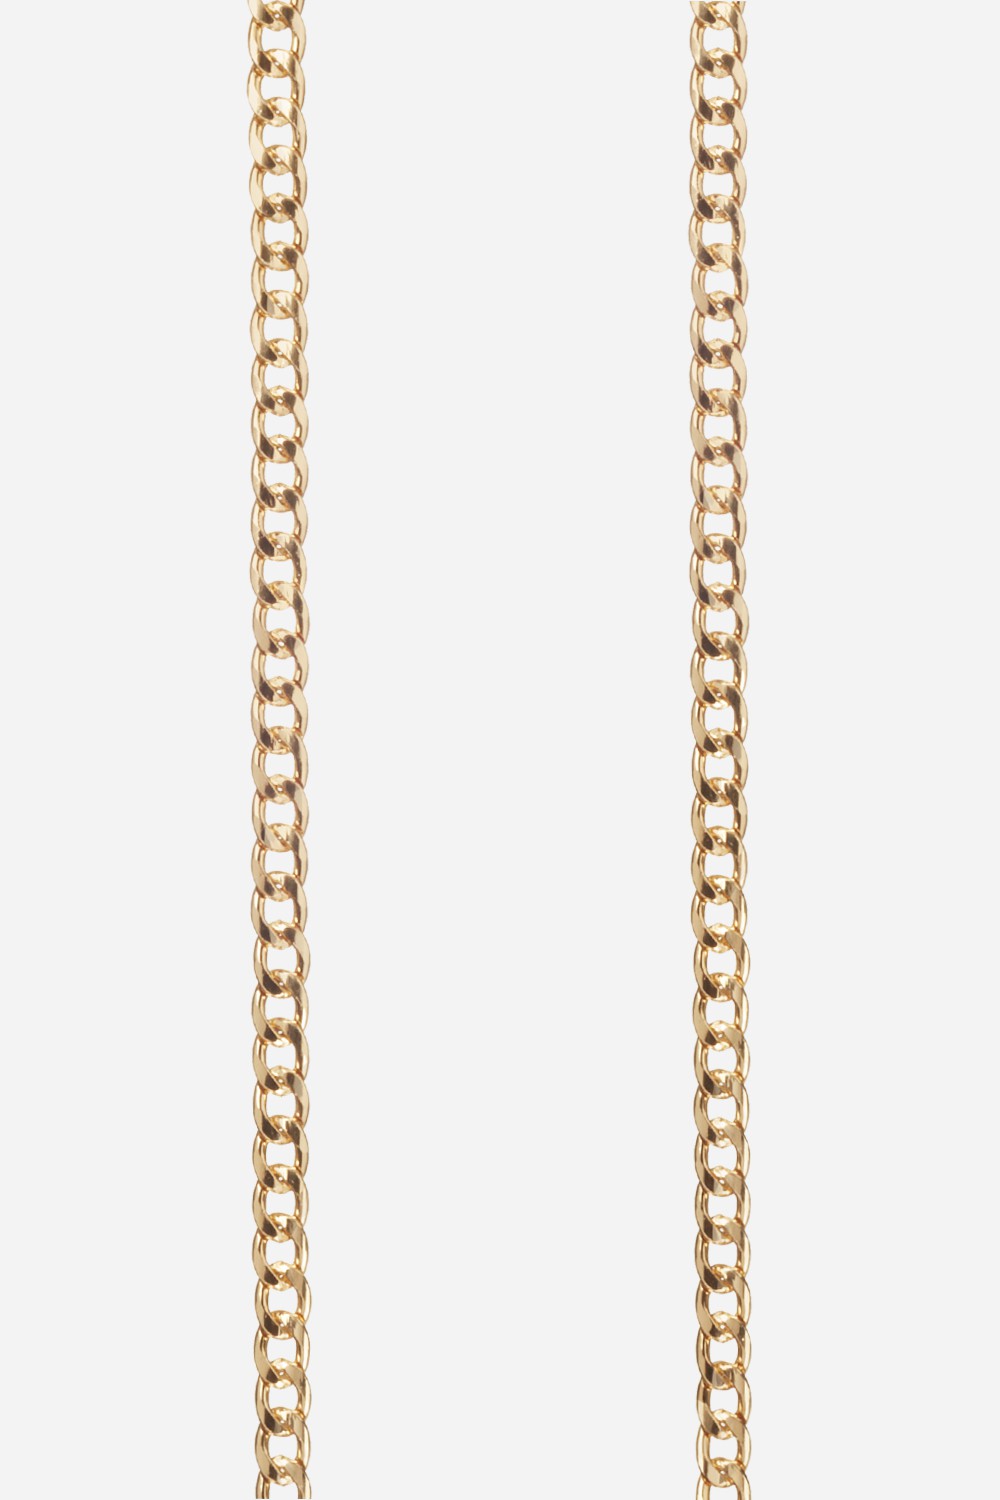 Sona Gold Long Chain 120 cm